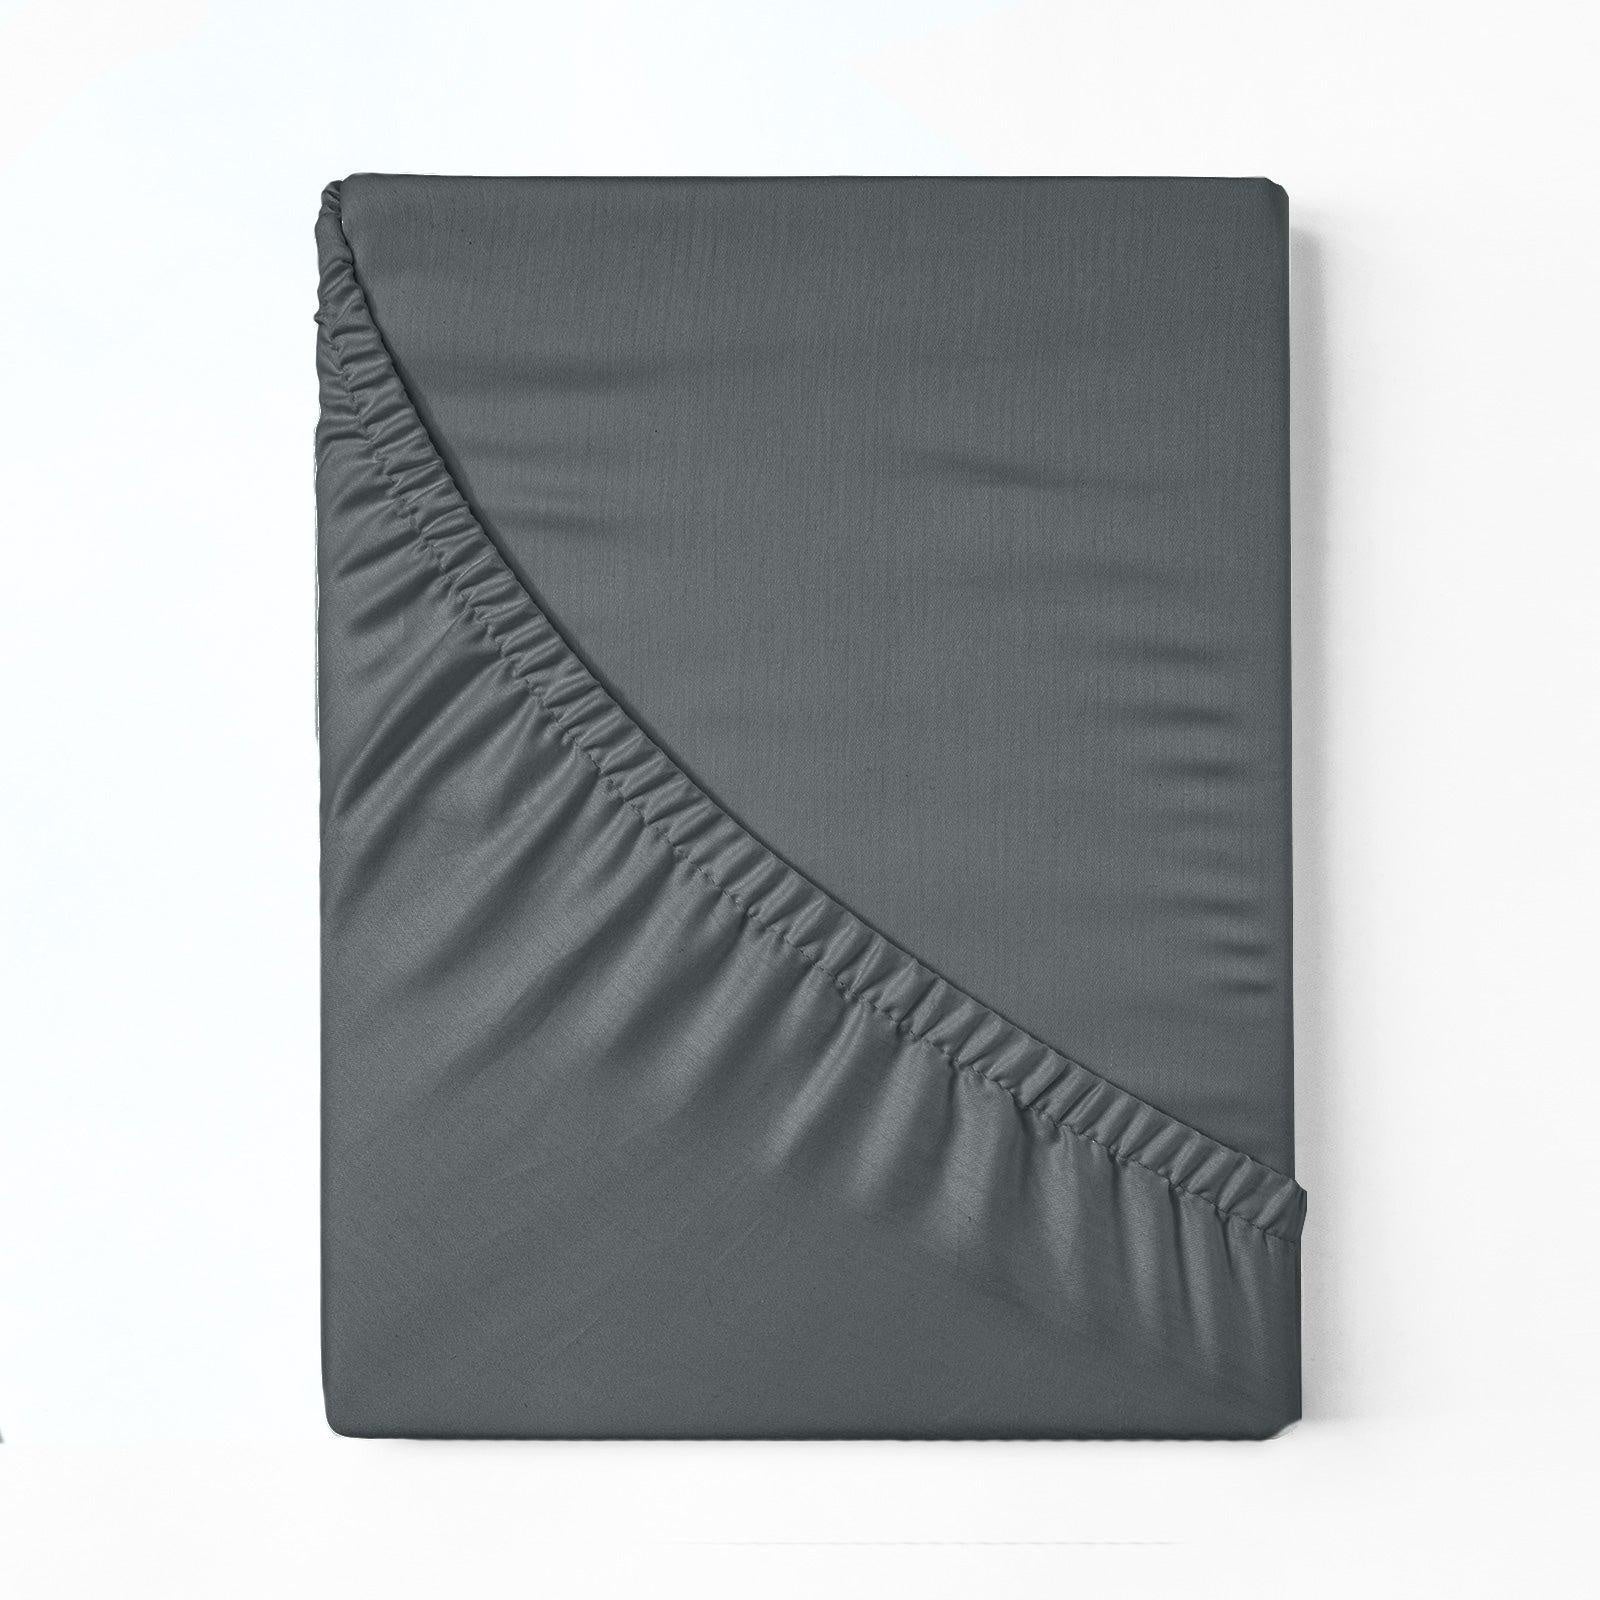 Royal Comfort 1200 Thread Count Fitted Sheet Cotton Blend Ultra Soft Bedding Dark Grey King Deals499